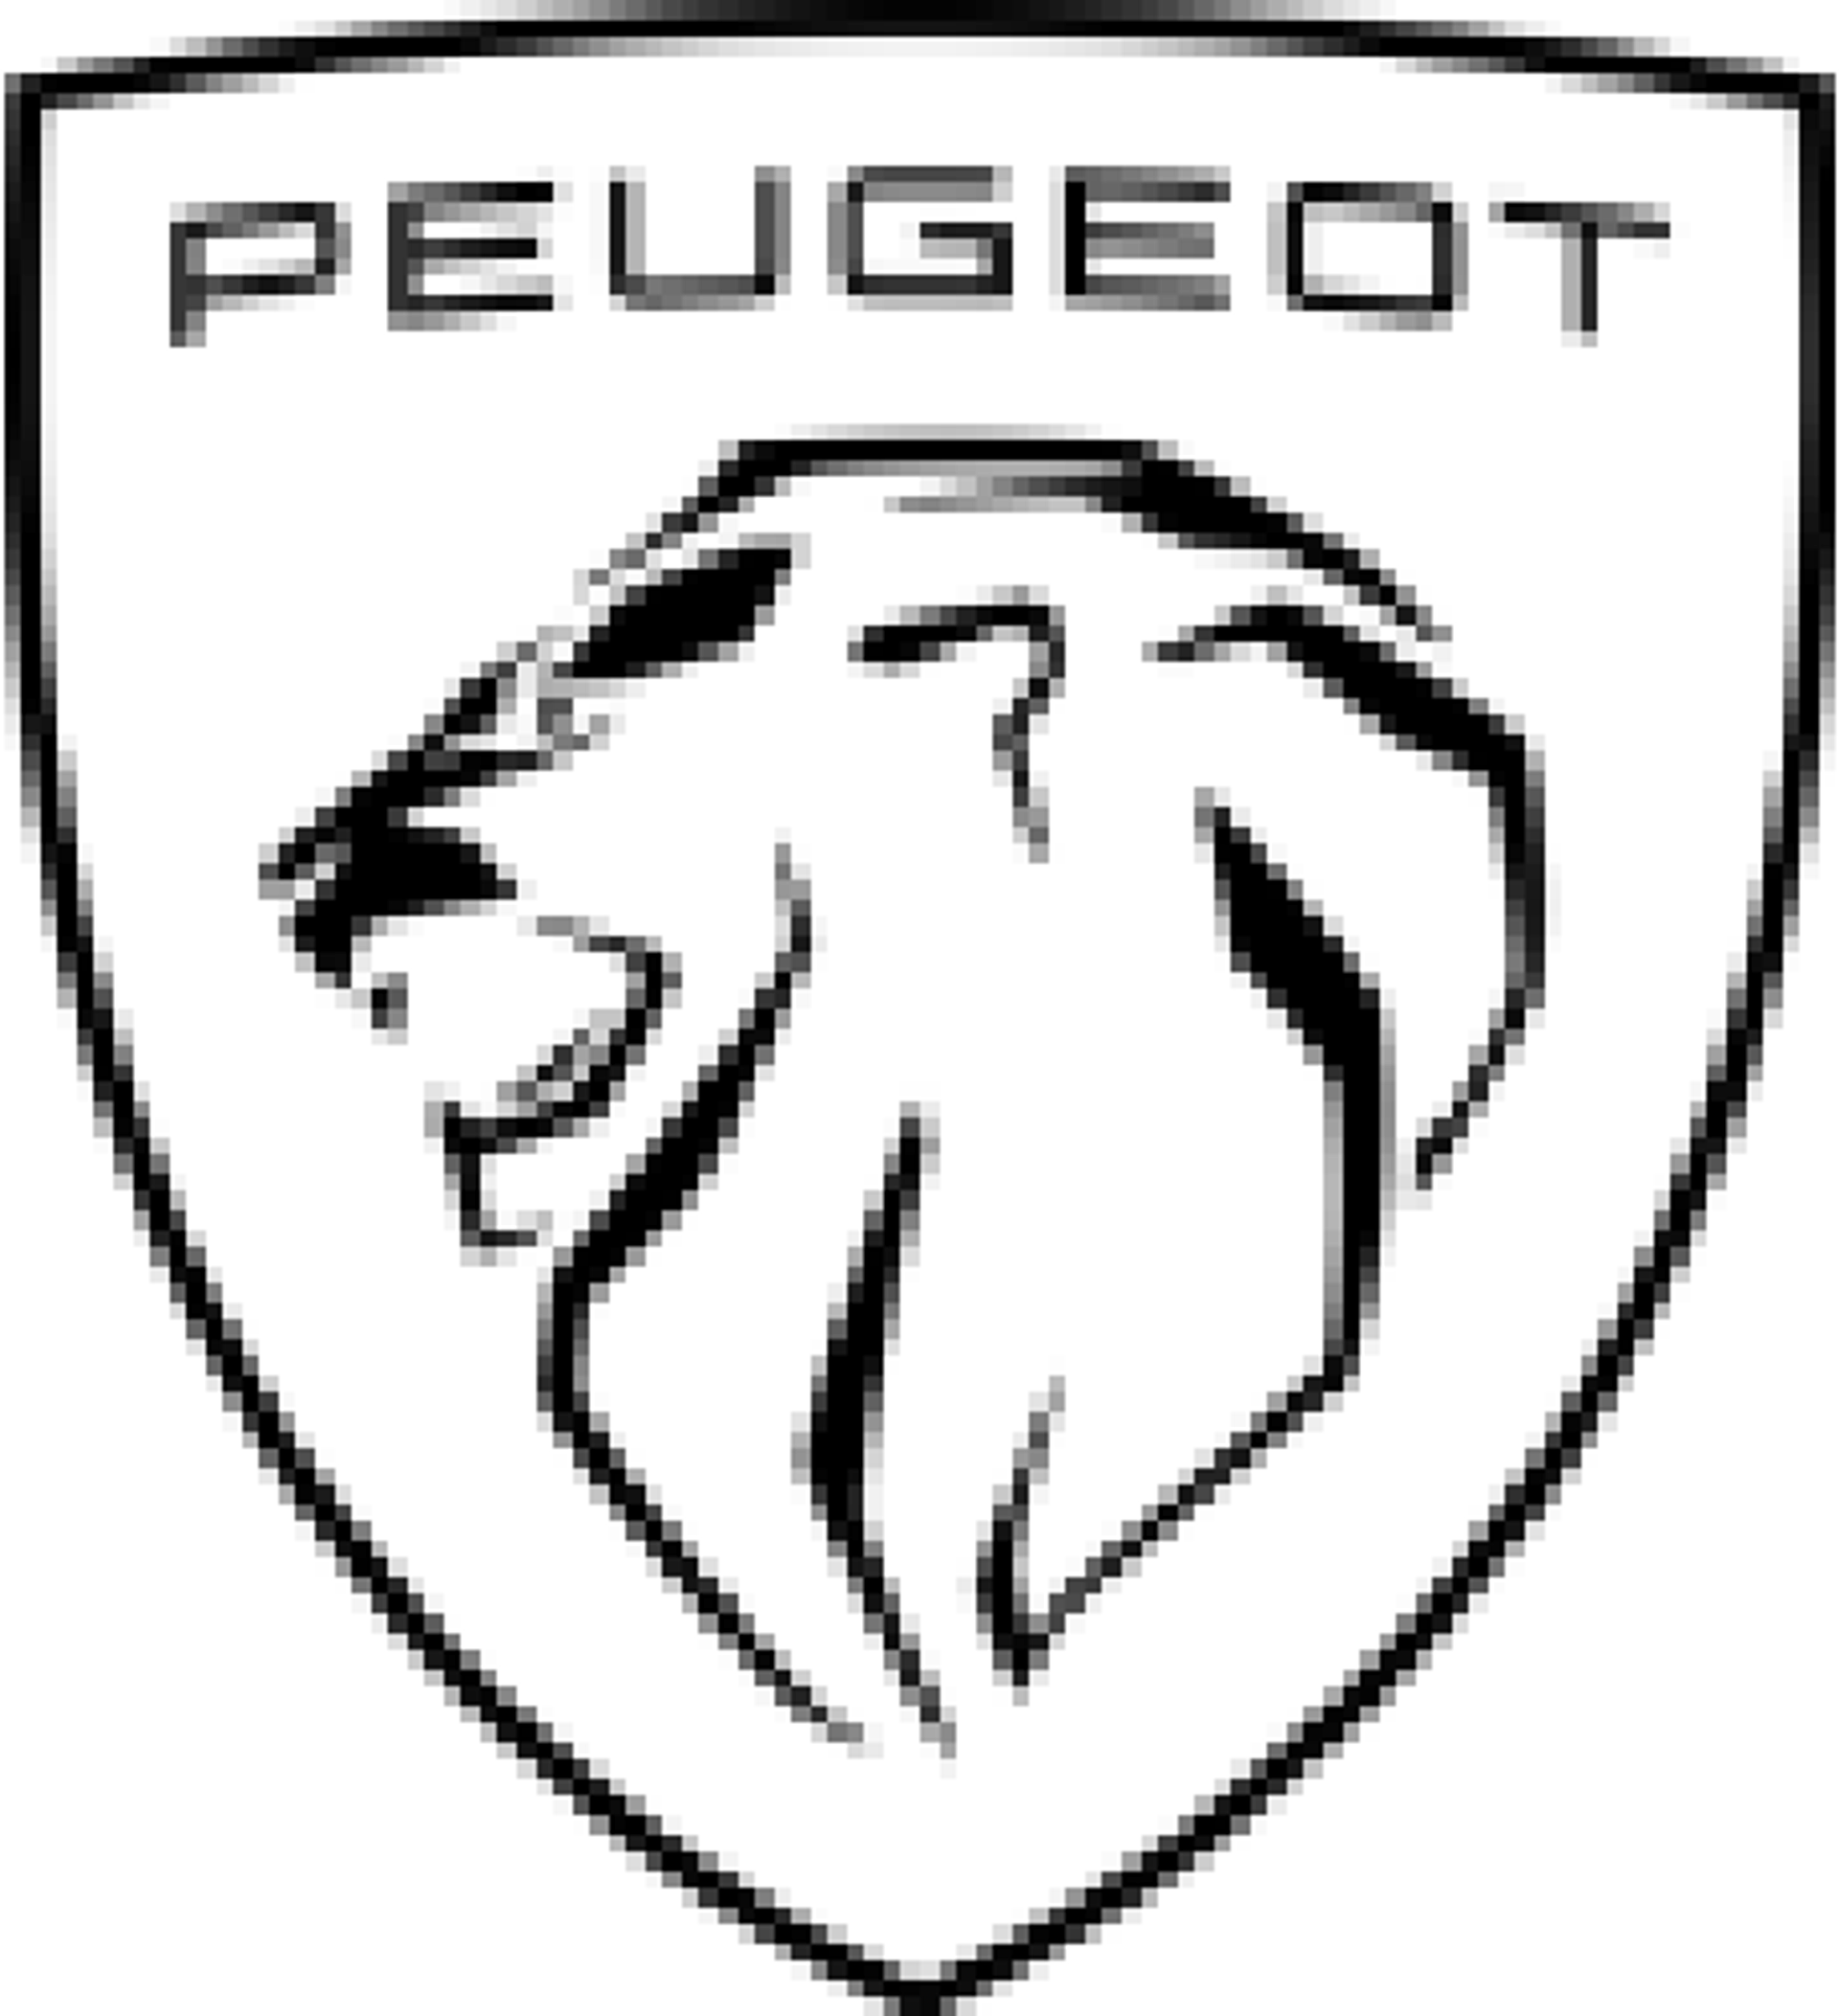  PEUGEOT logo die aktuell Flugblatt